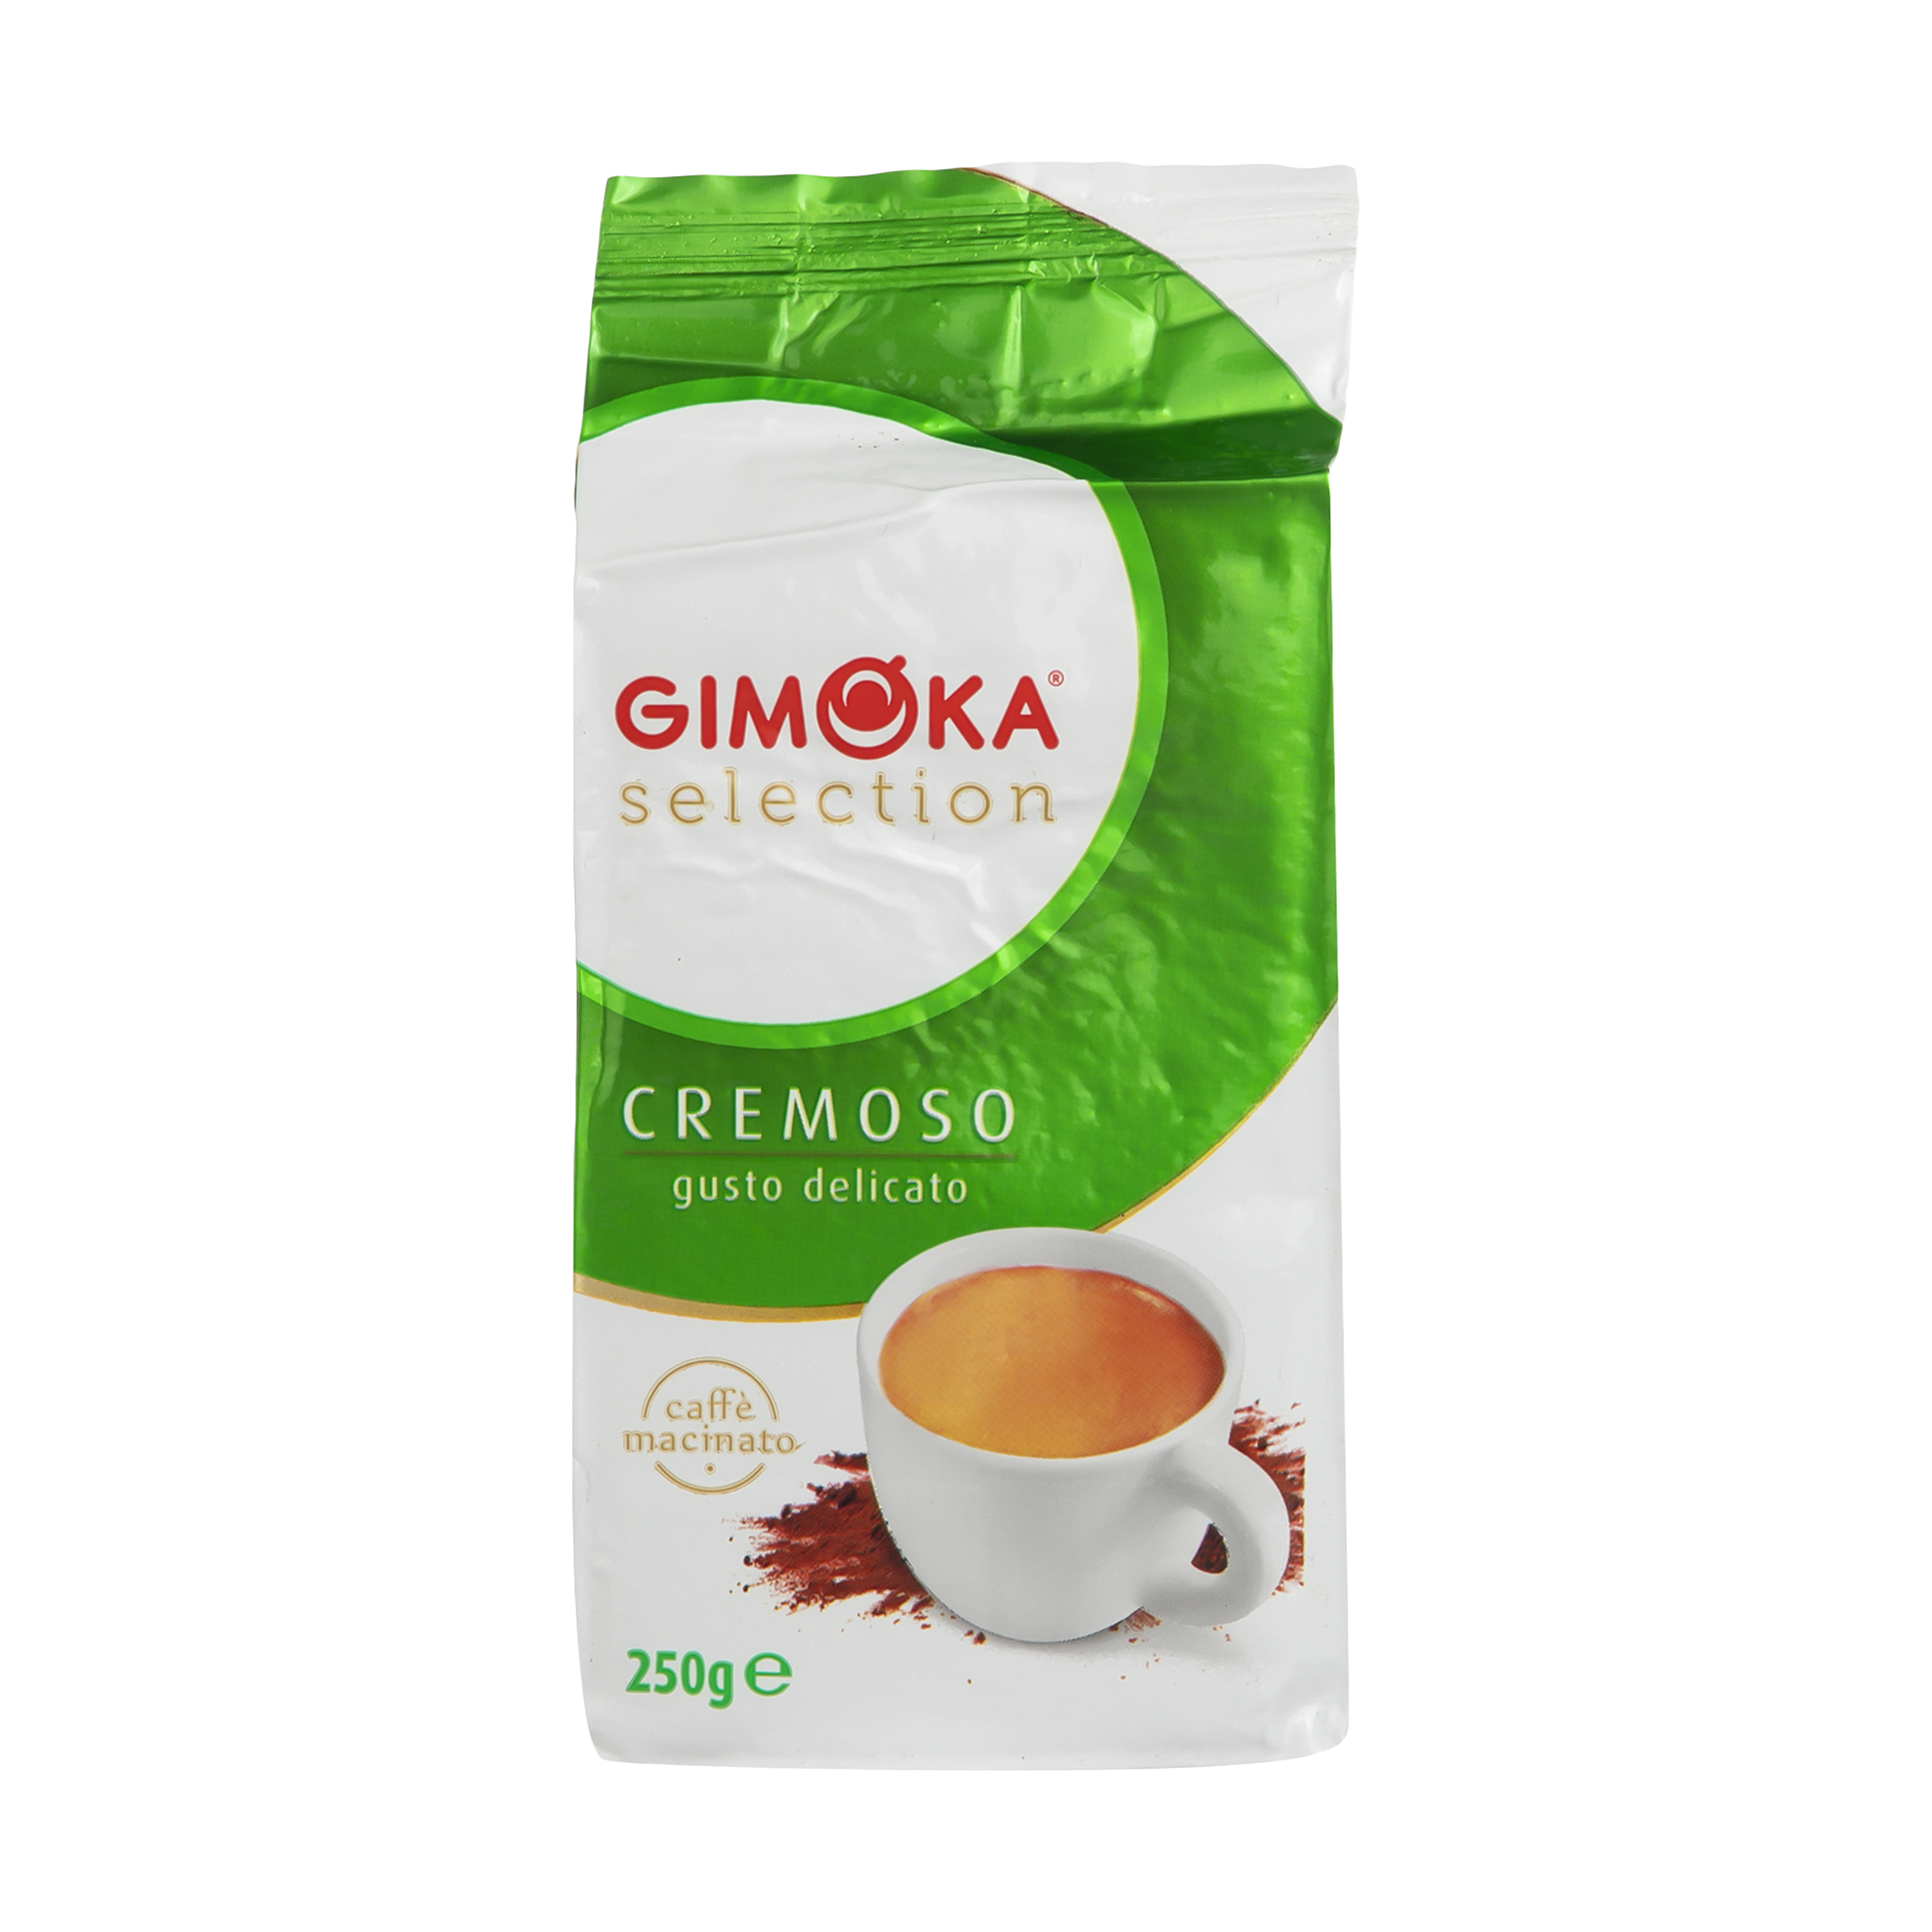 پودر قهوه کرمسو سلکشن جیموکا - 250 گرم 